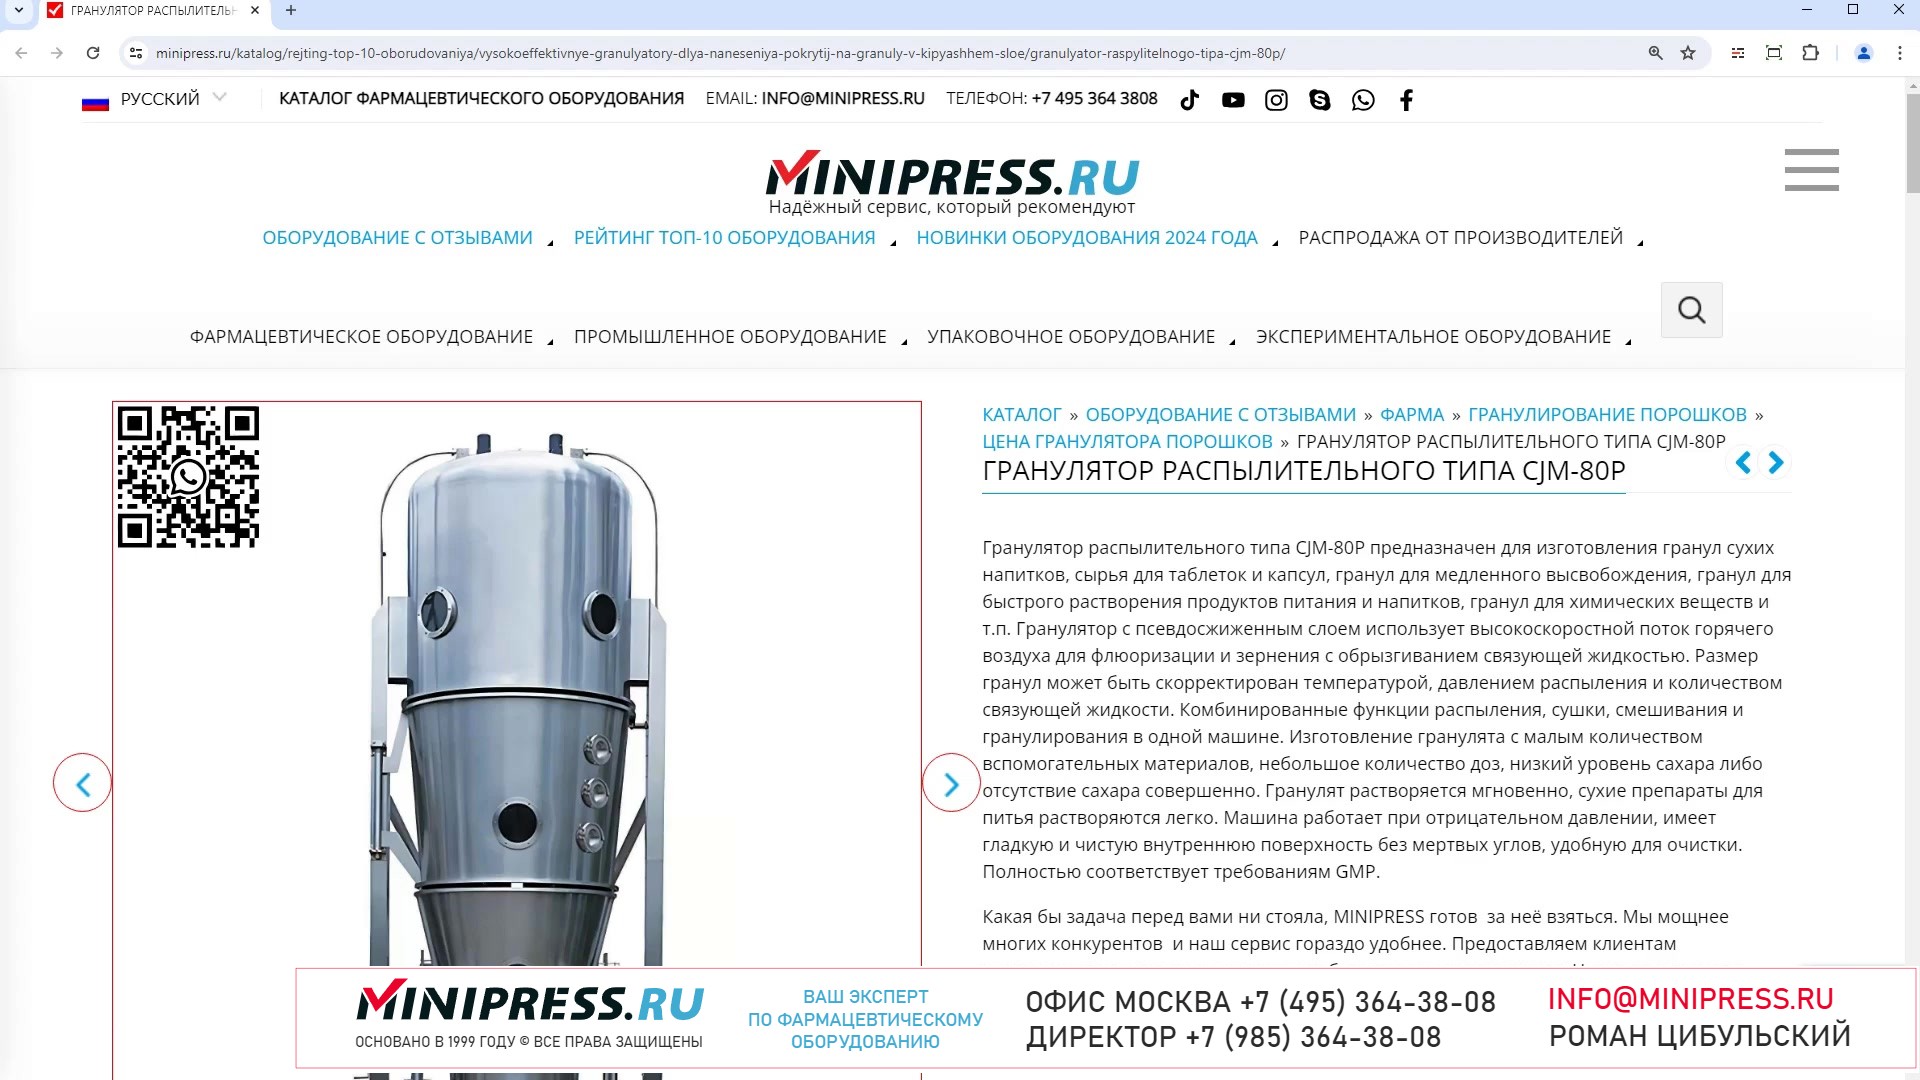 Minipress.ru Гранулятор распылительного типа CJM-80P